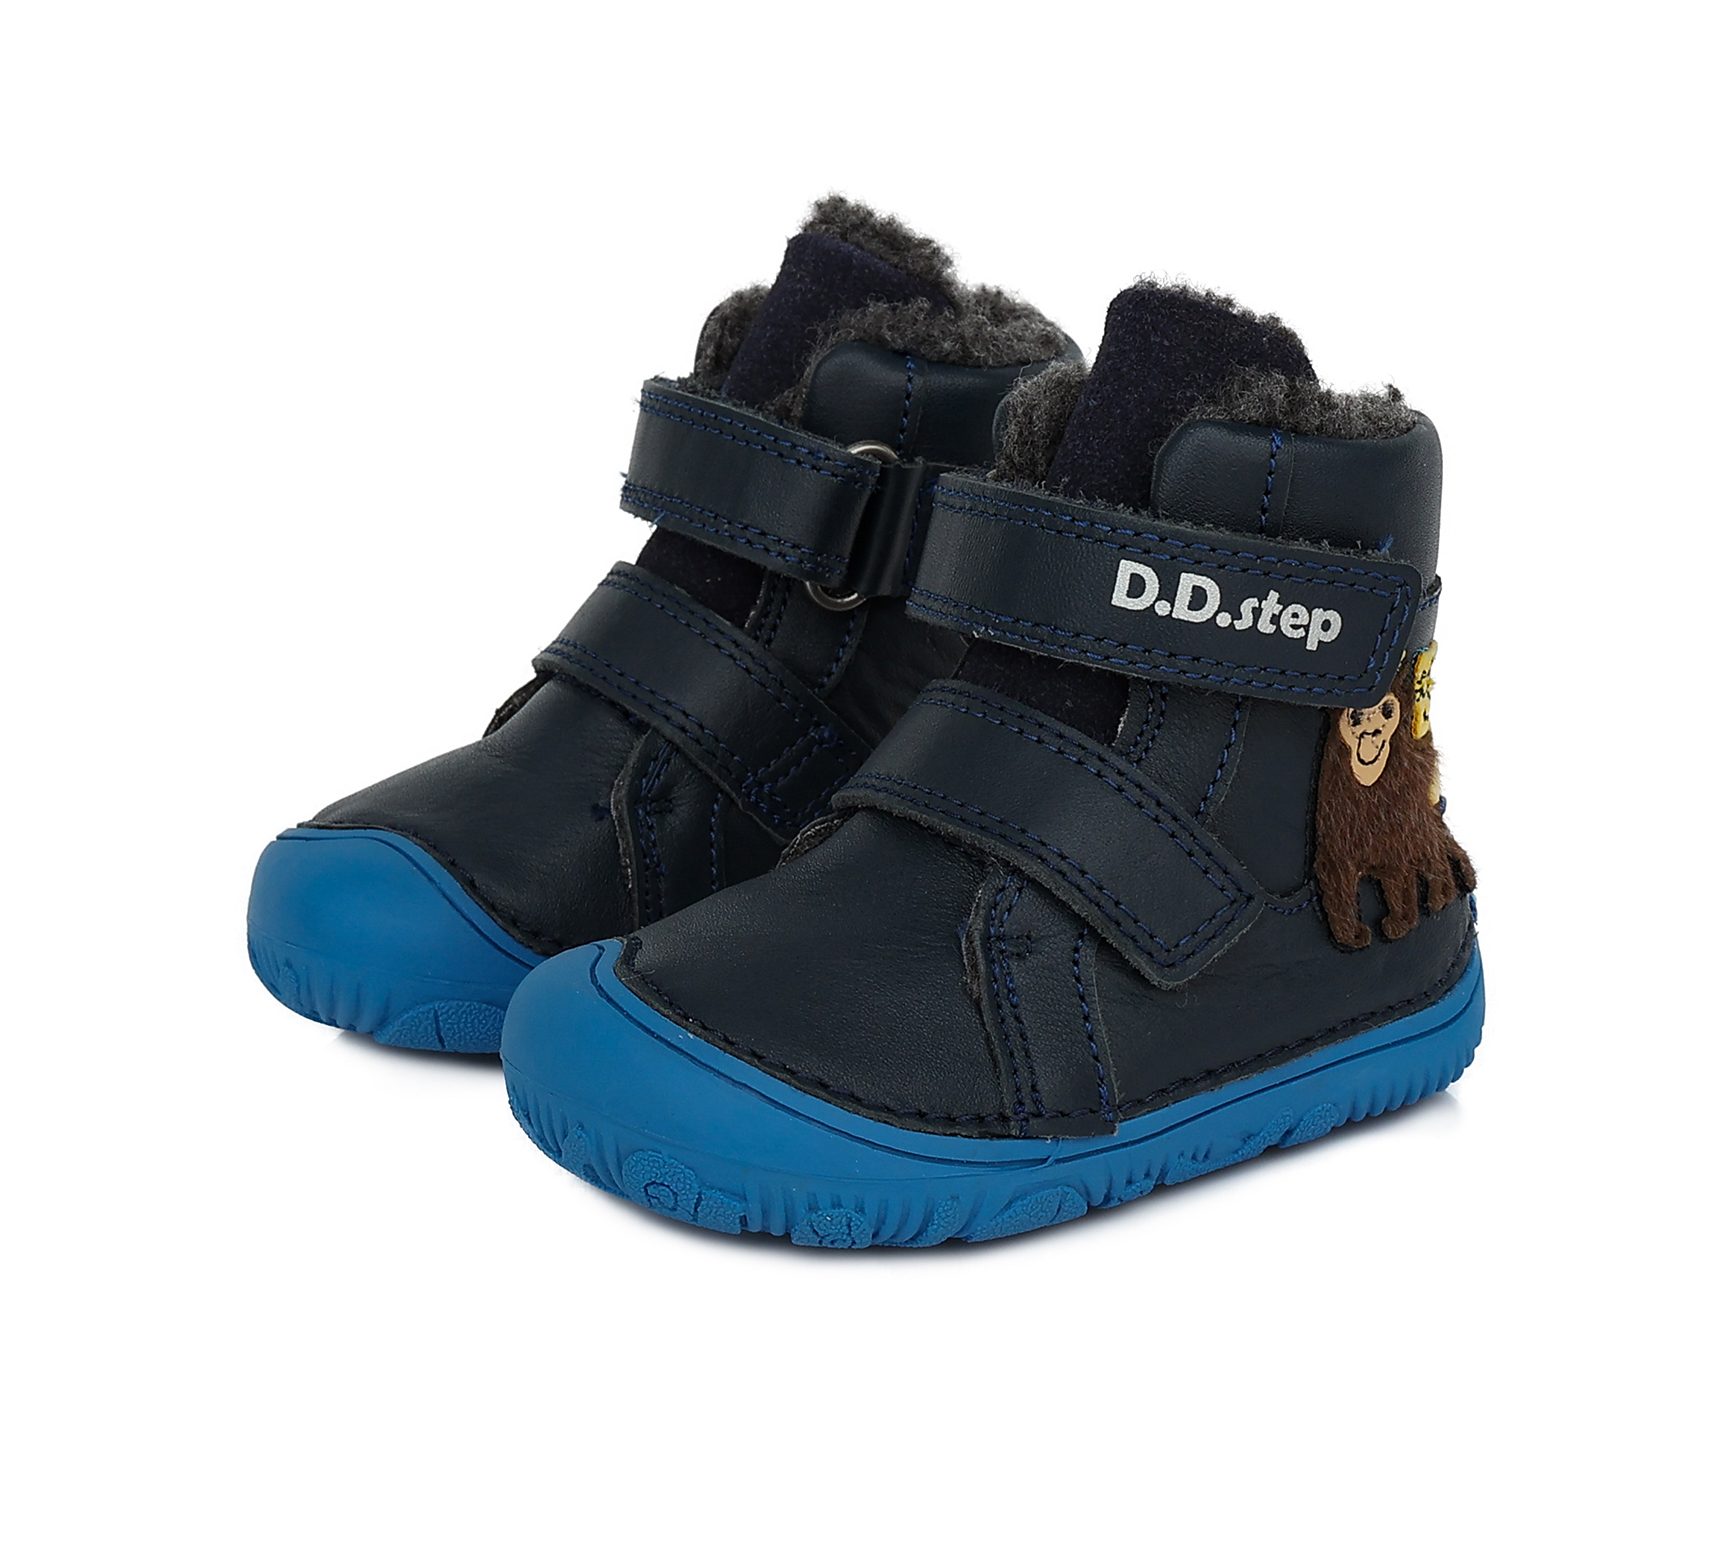 D.D.Step winter boots Royal Blue Gorilla